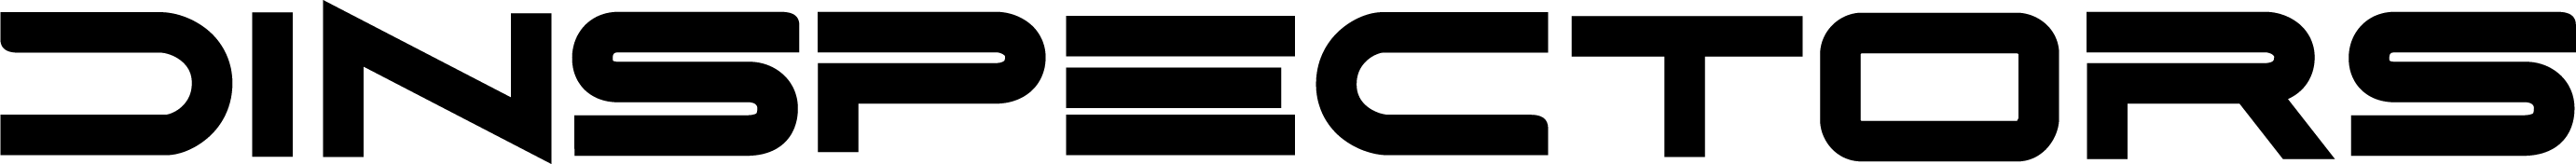 Dinspectors logo